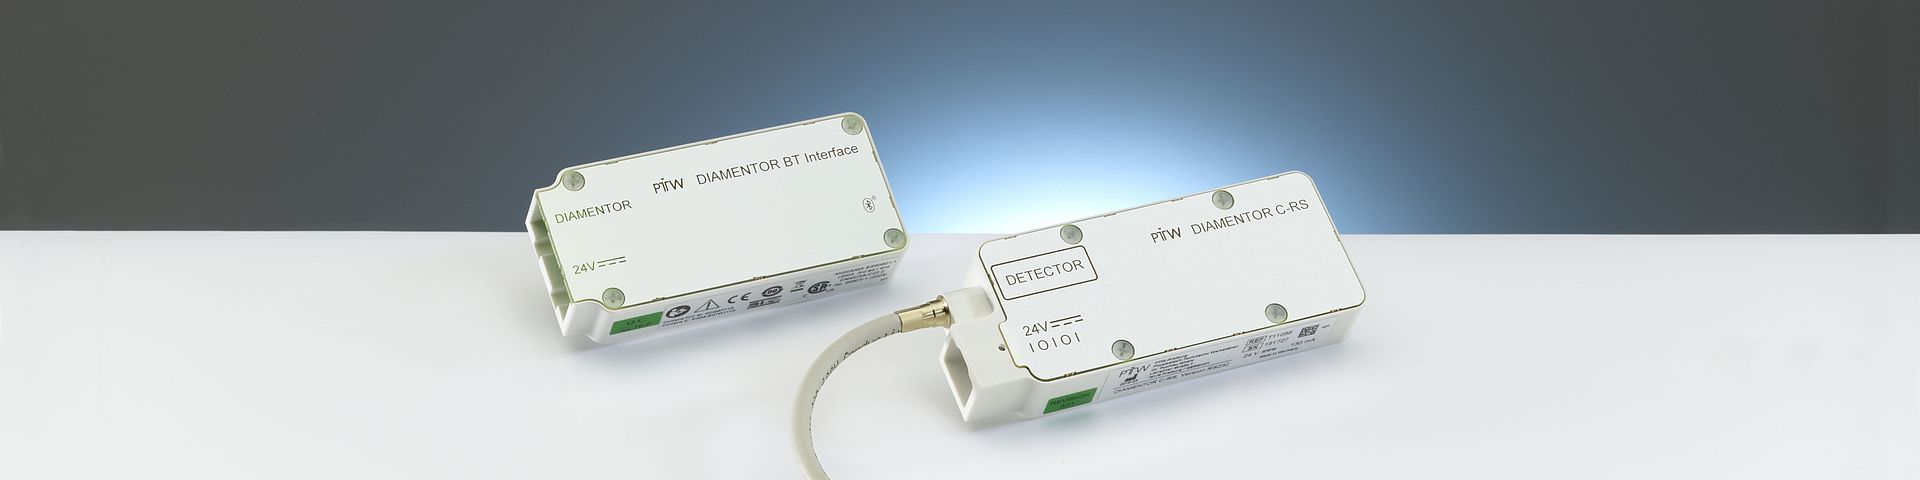 PTW DIAMENTOR BT Interface, DIAMENTOR C-RS